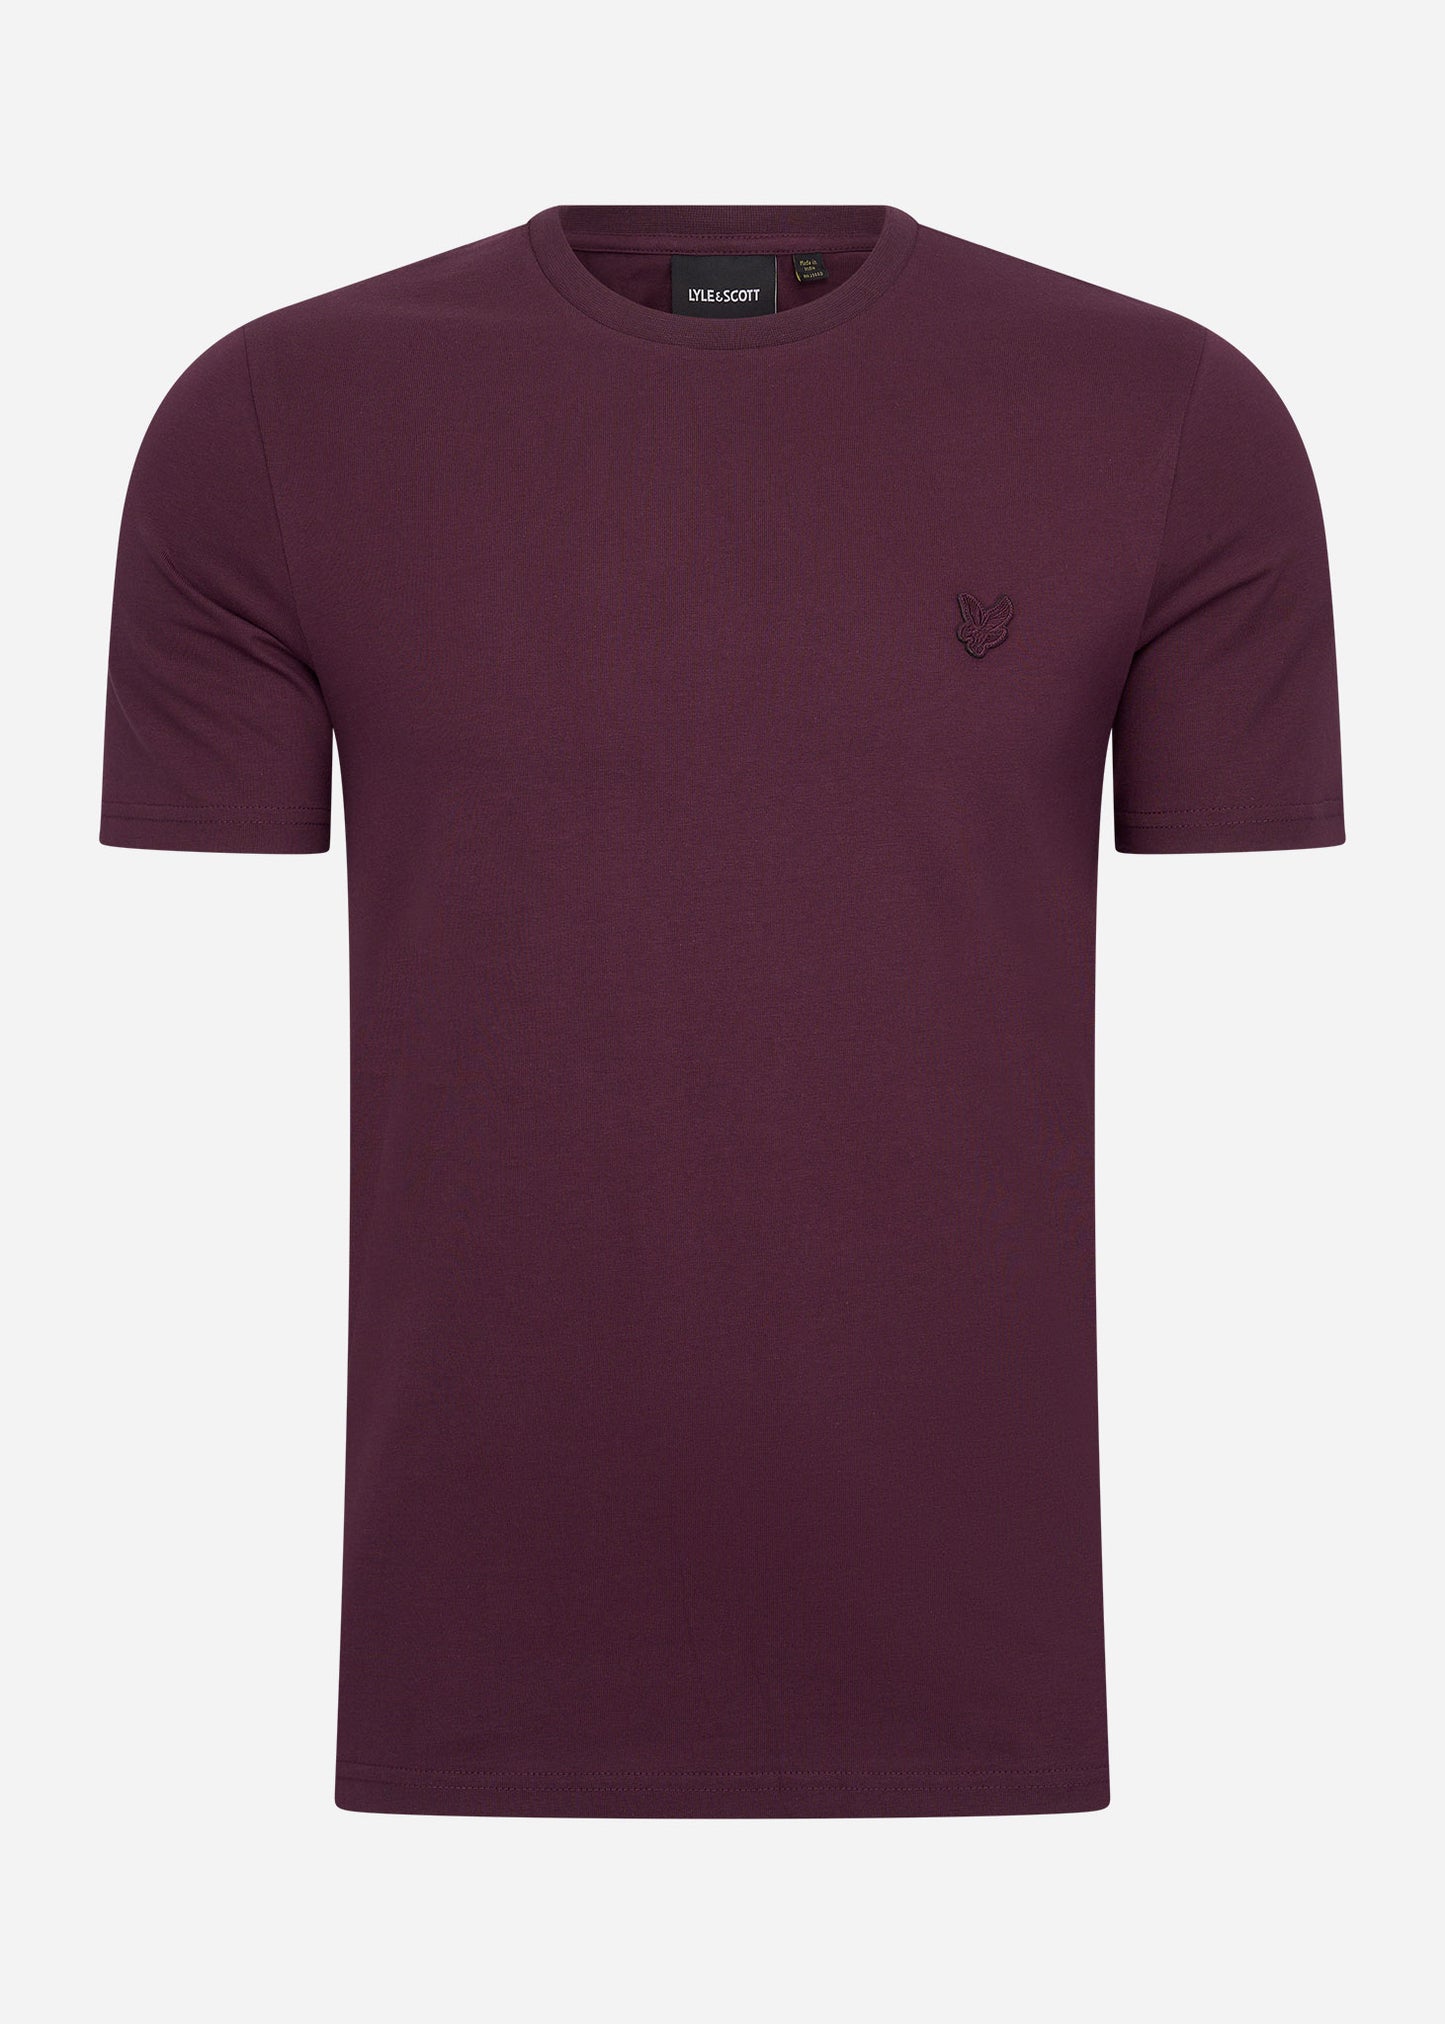 Tonal eagle t-shirt - burgundy